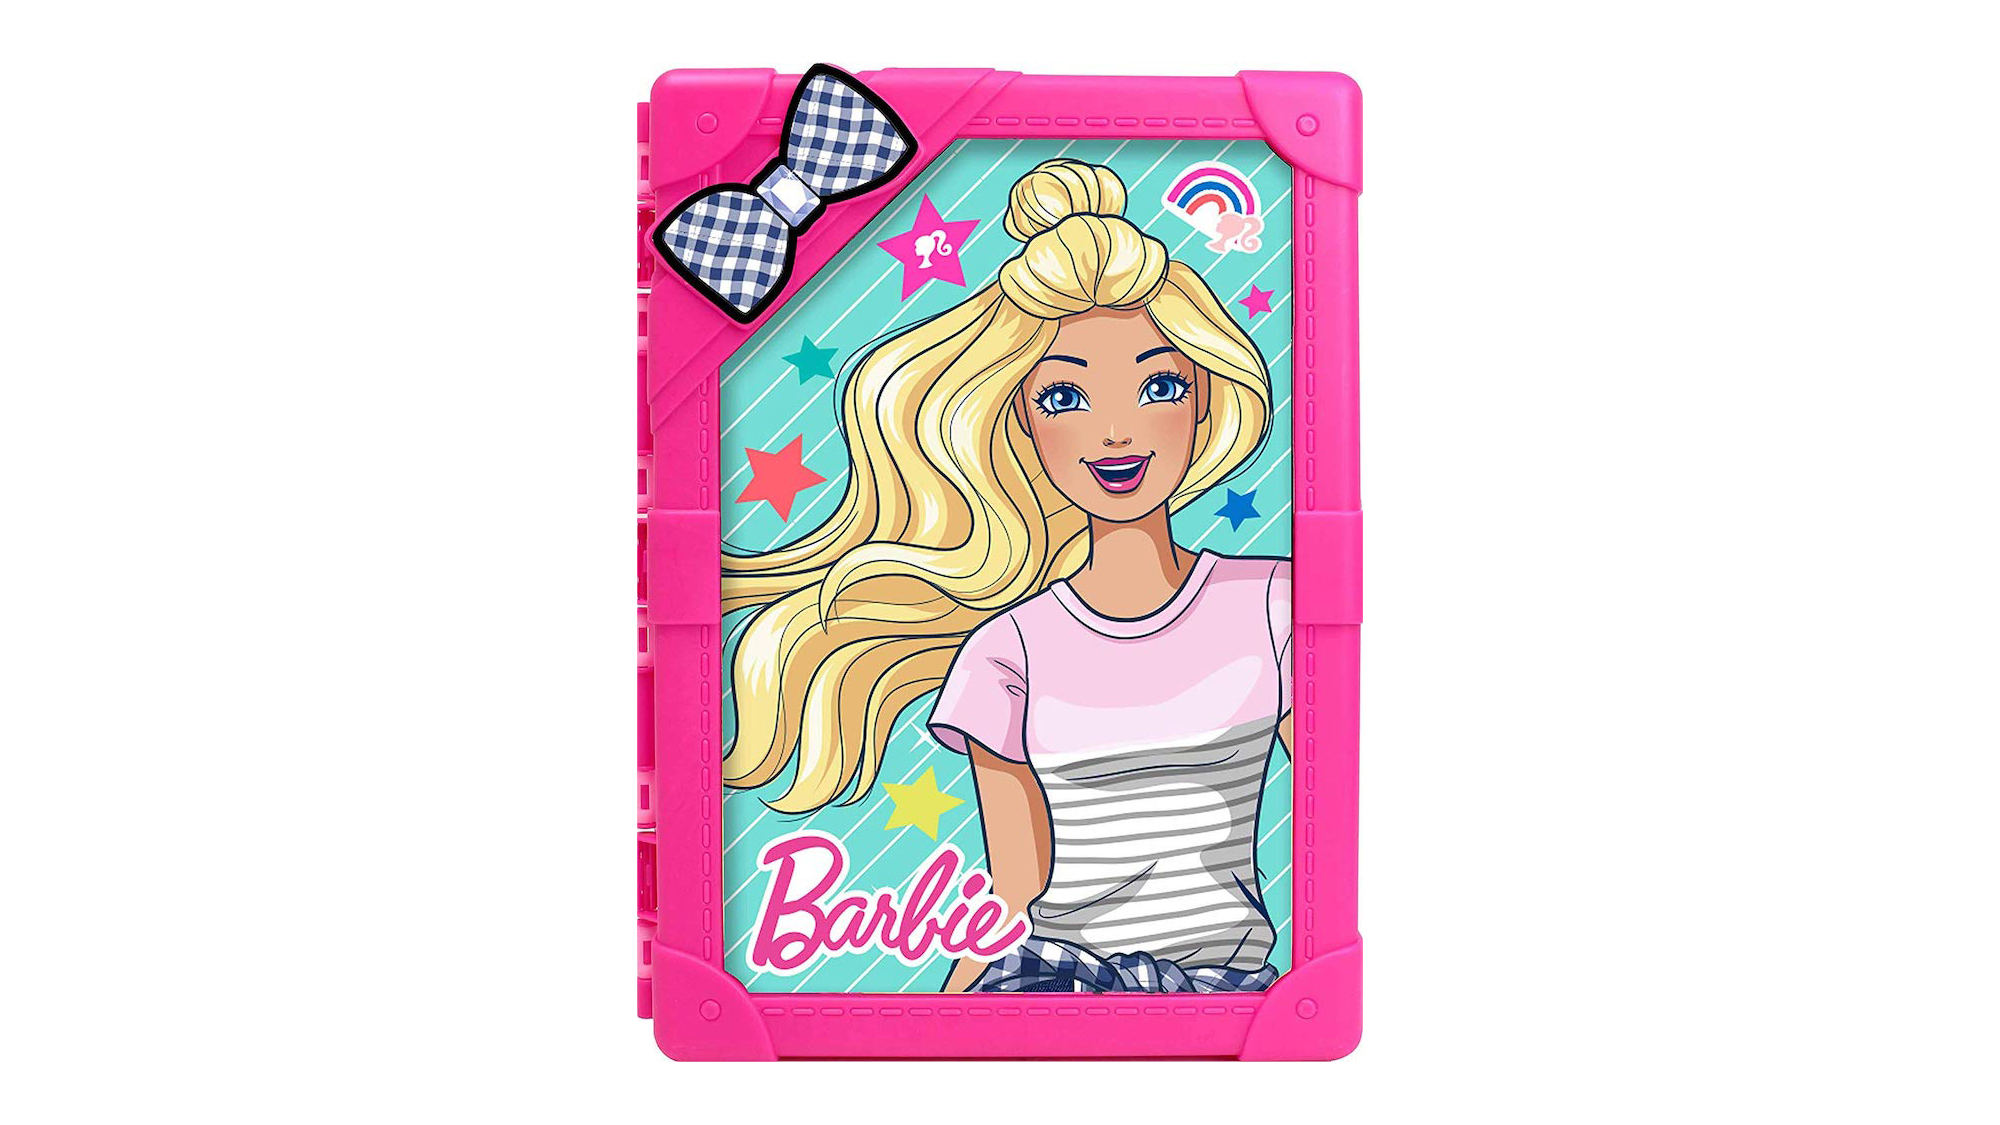 fashionista barbie doll storage case